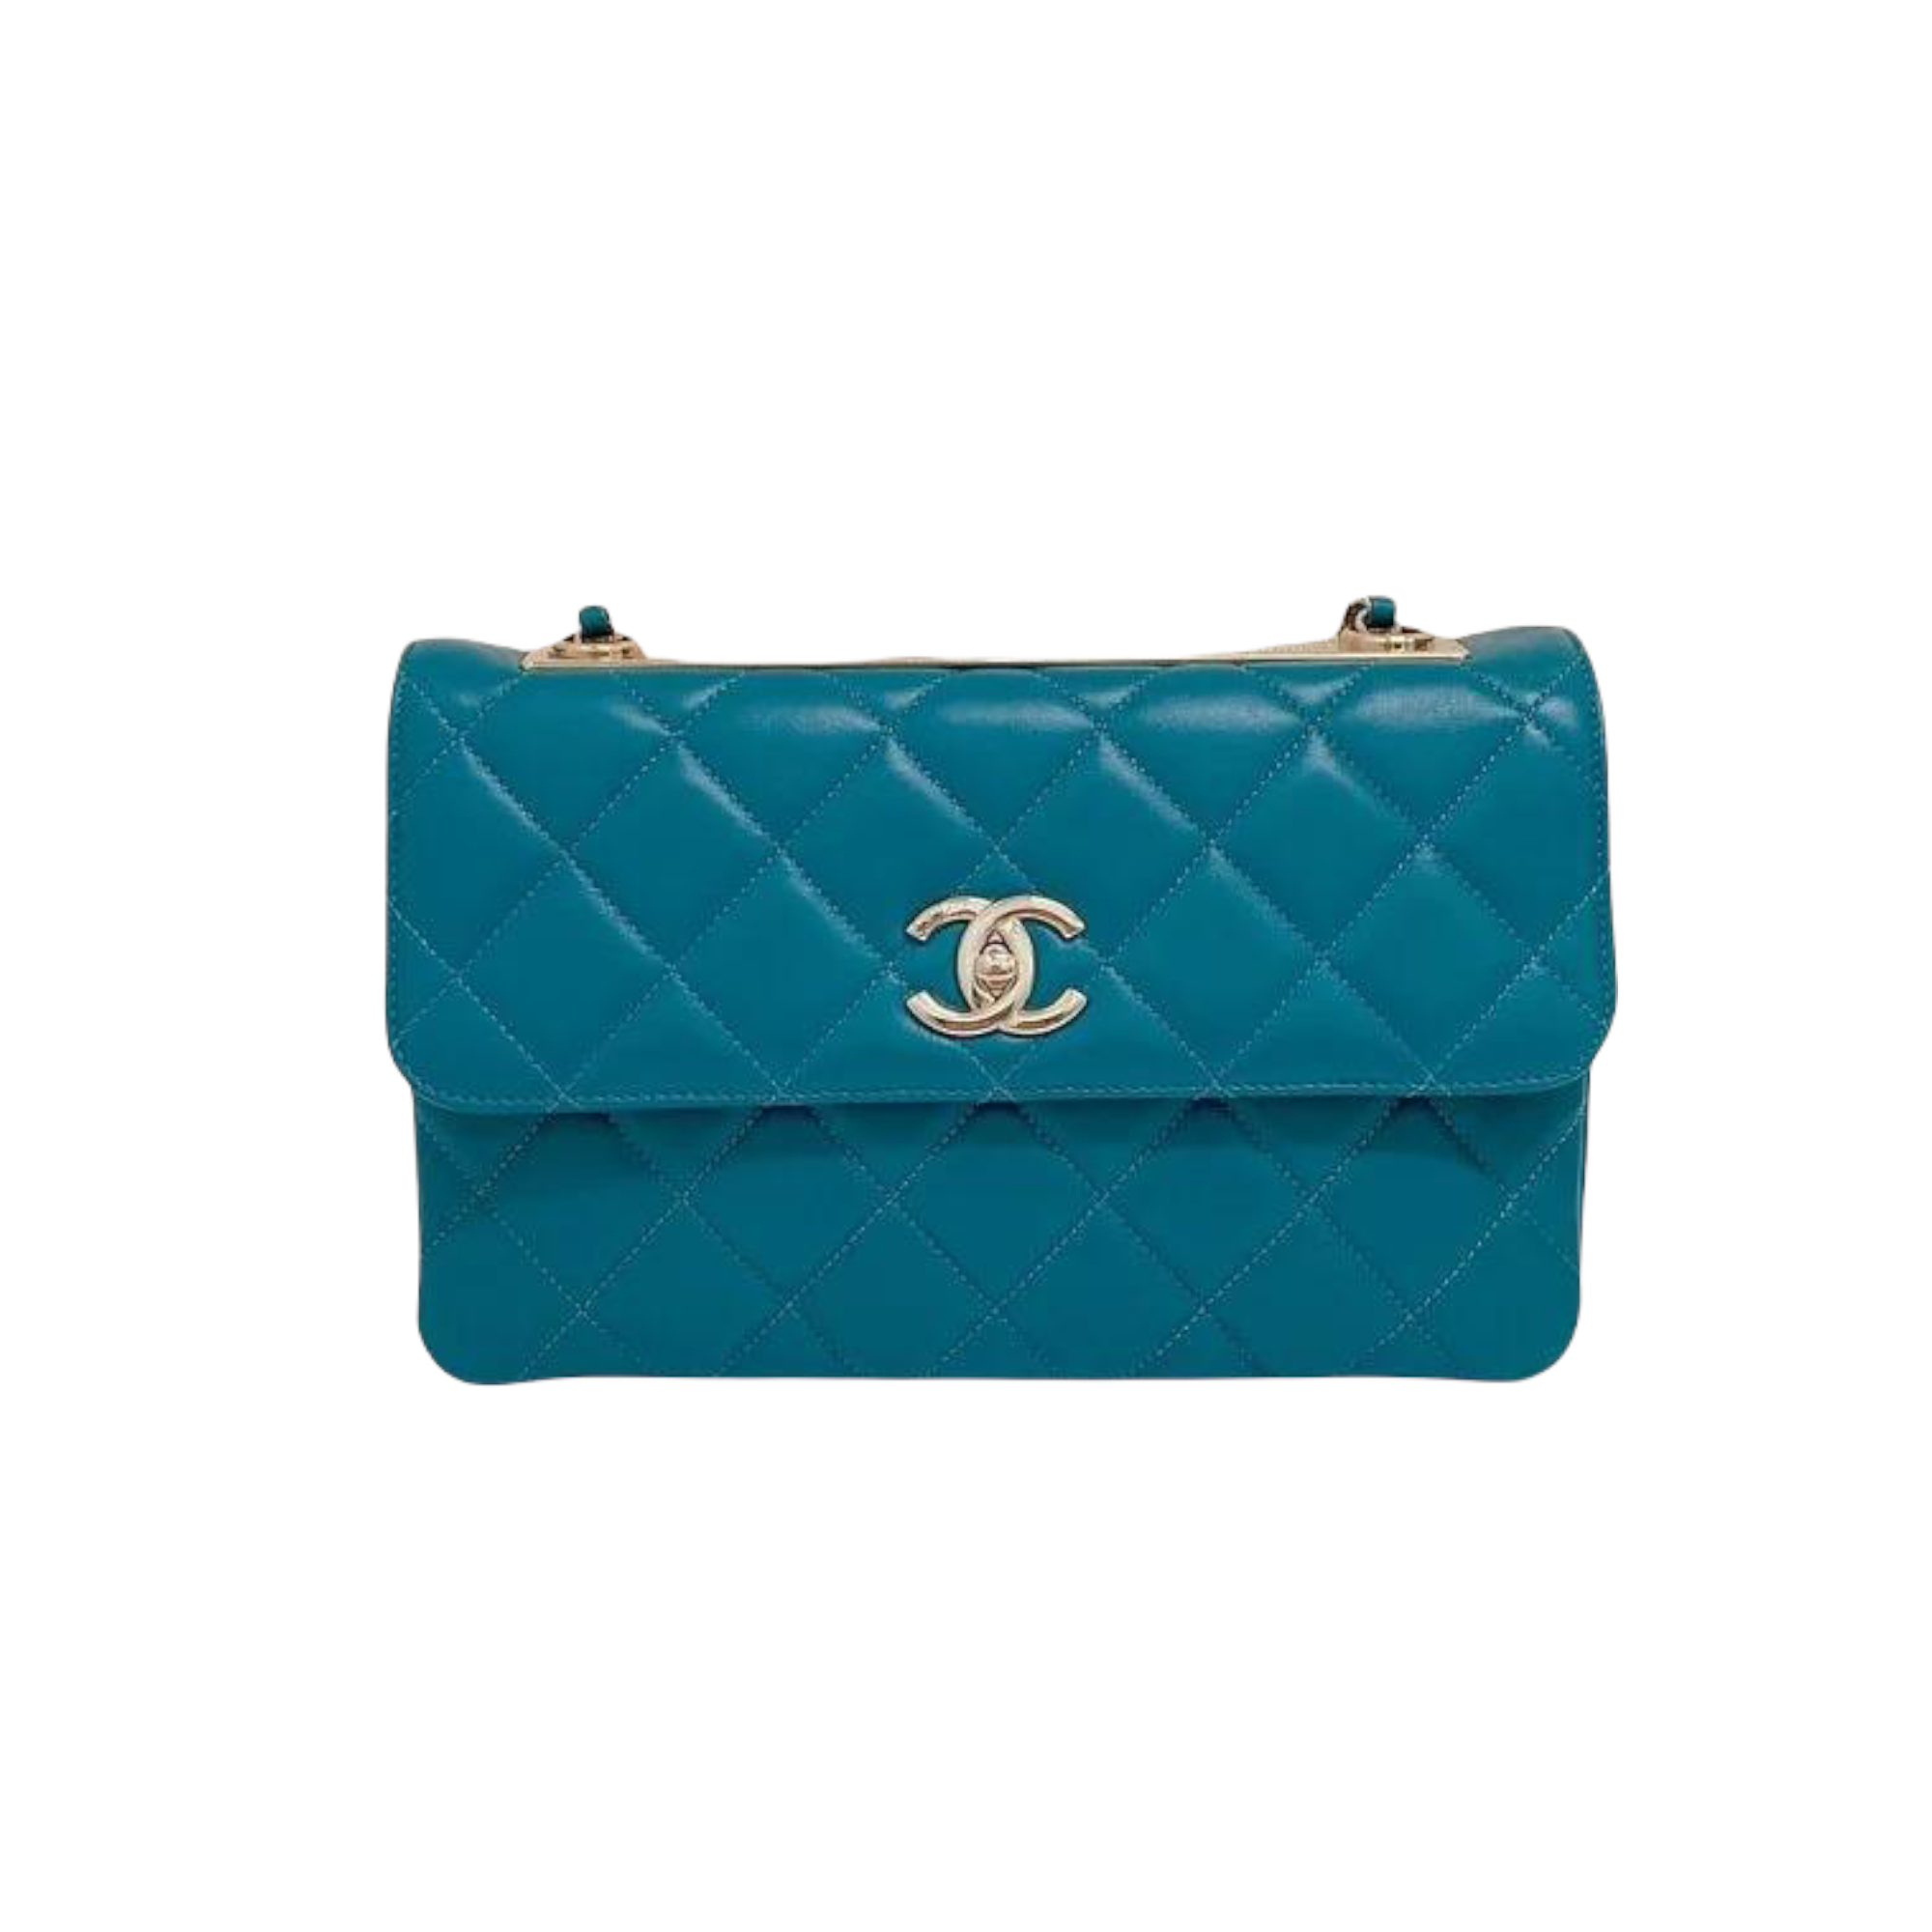 Trendy CC Flap Bag Lambskin Turquoise GHW